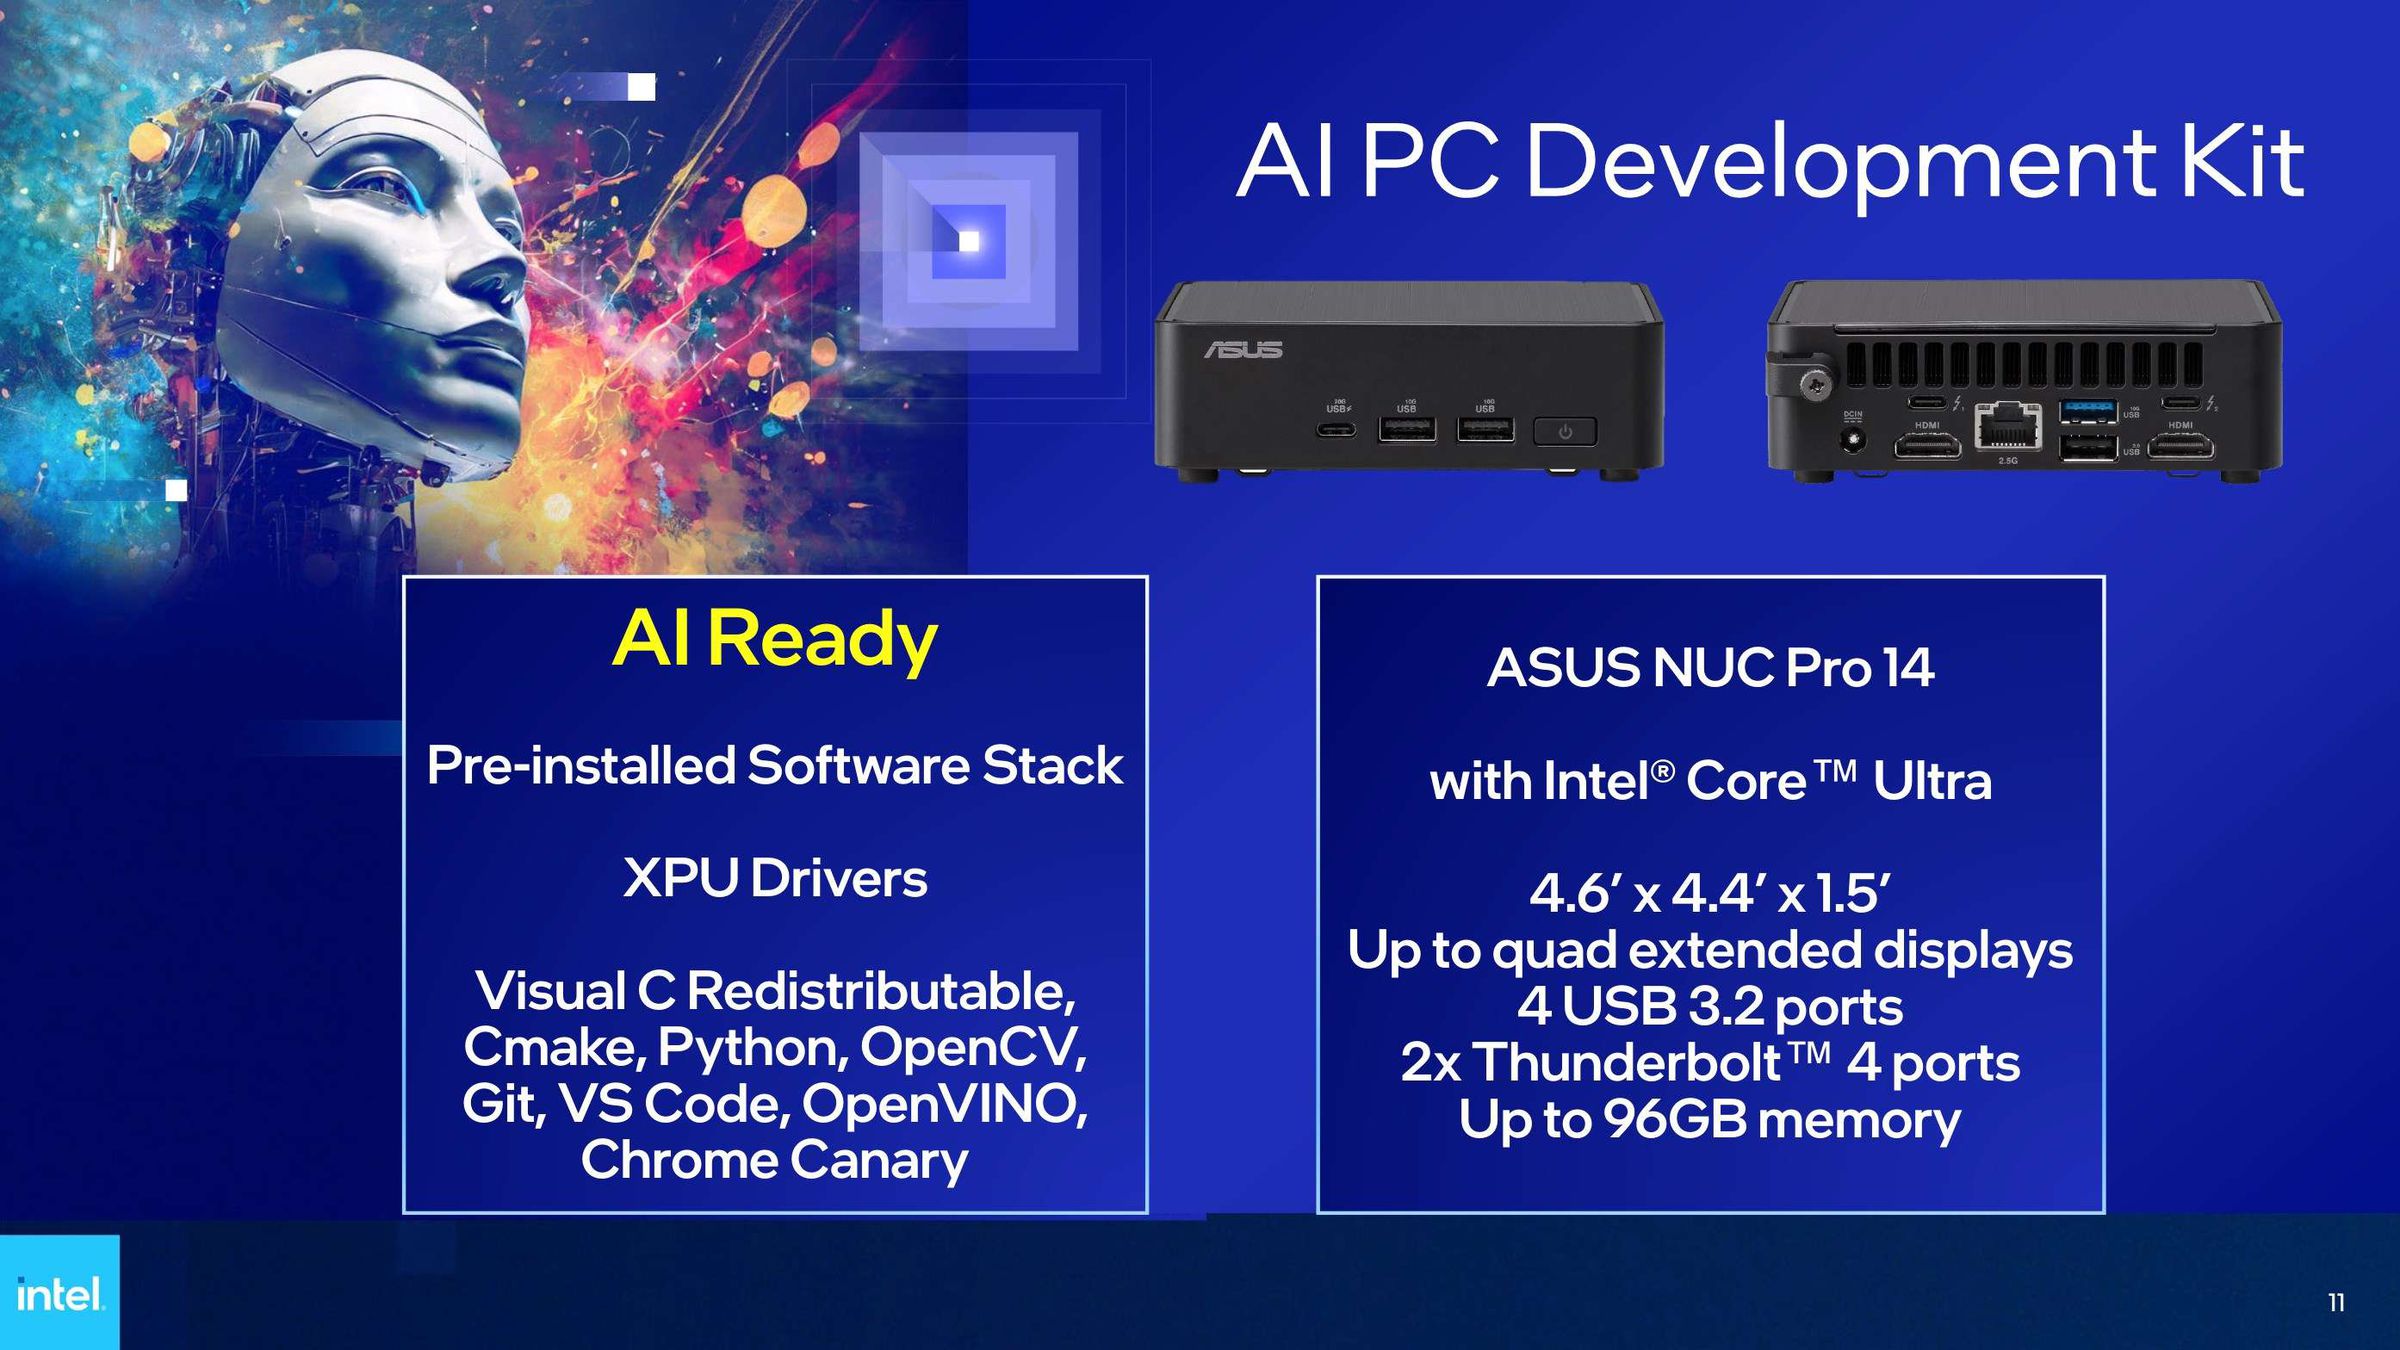 Intel’s AI PC development kit.